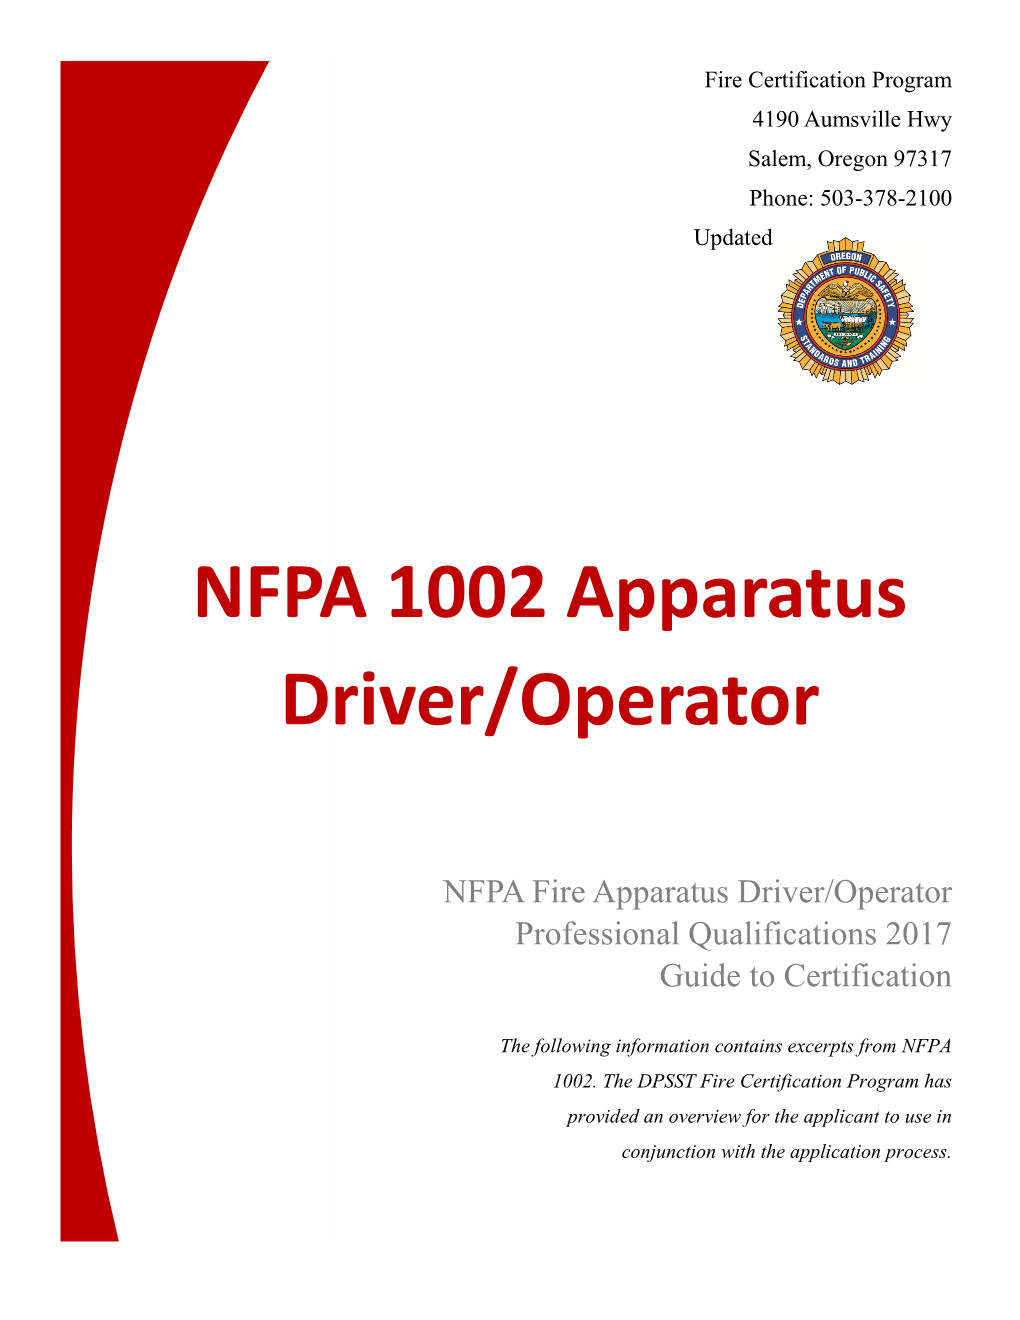 NFPA 1002 Apparatus Driver/Operator